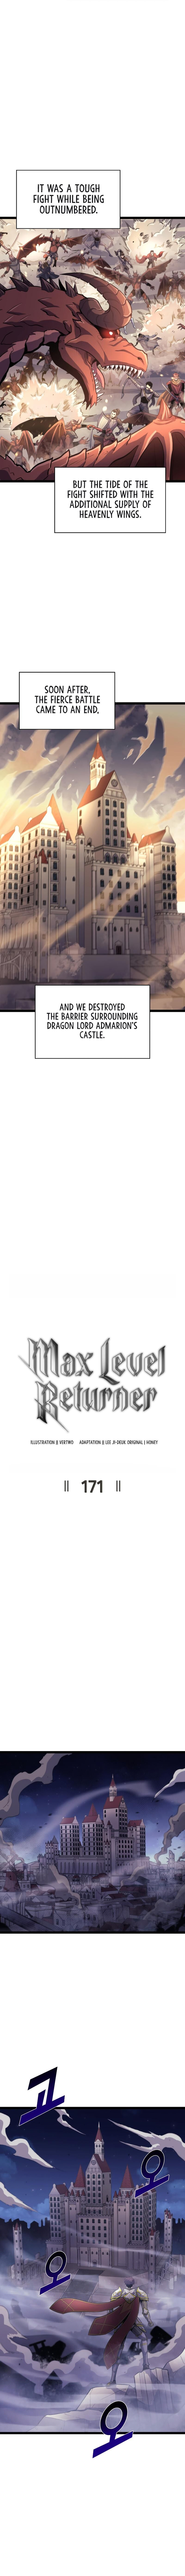 Max Level Returner 171 2